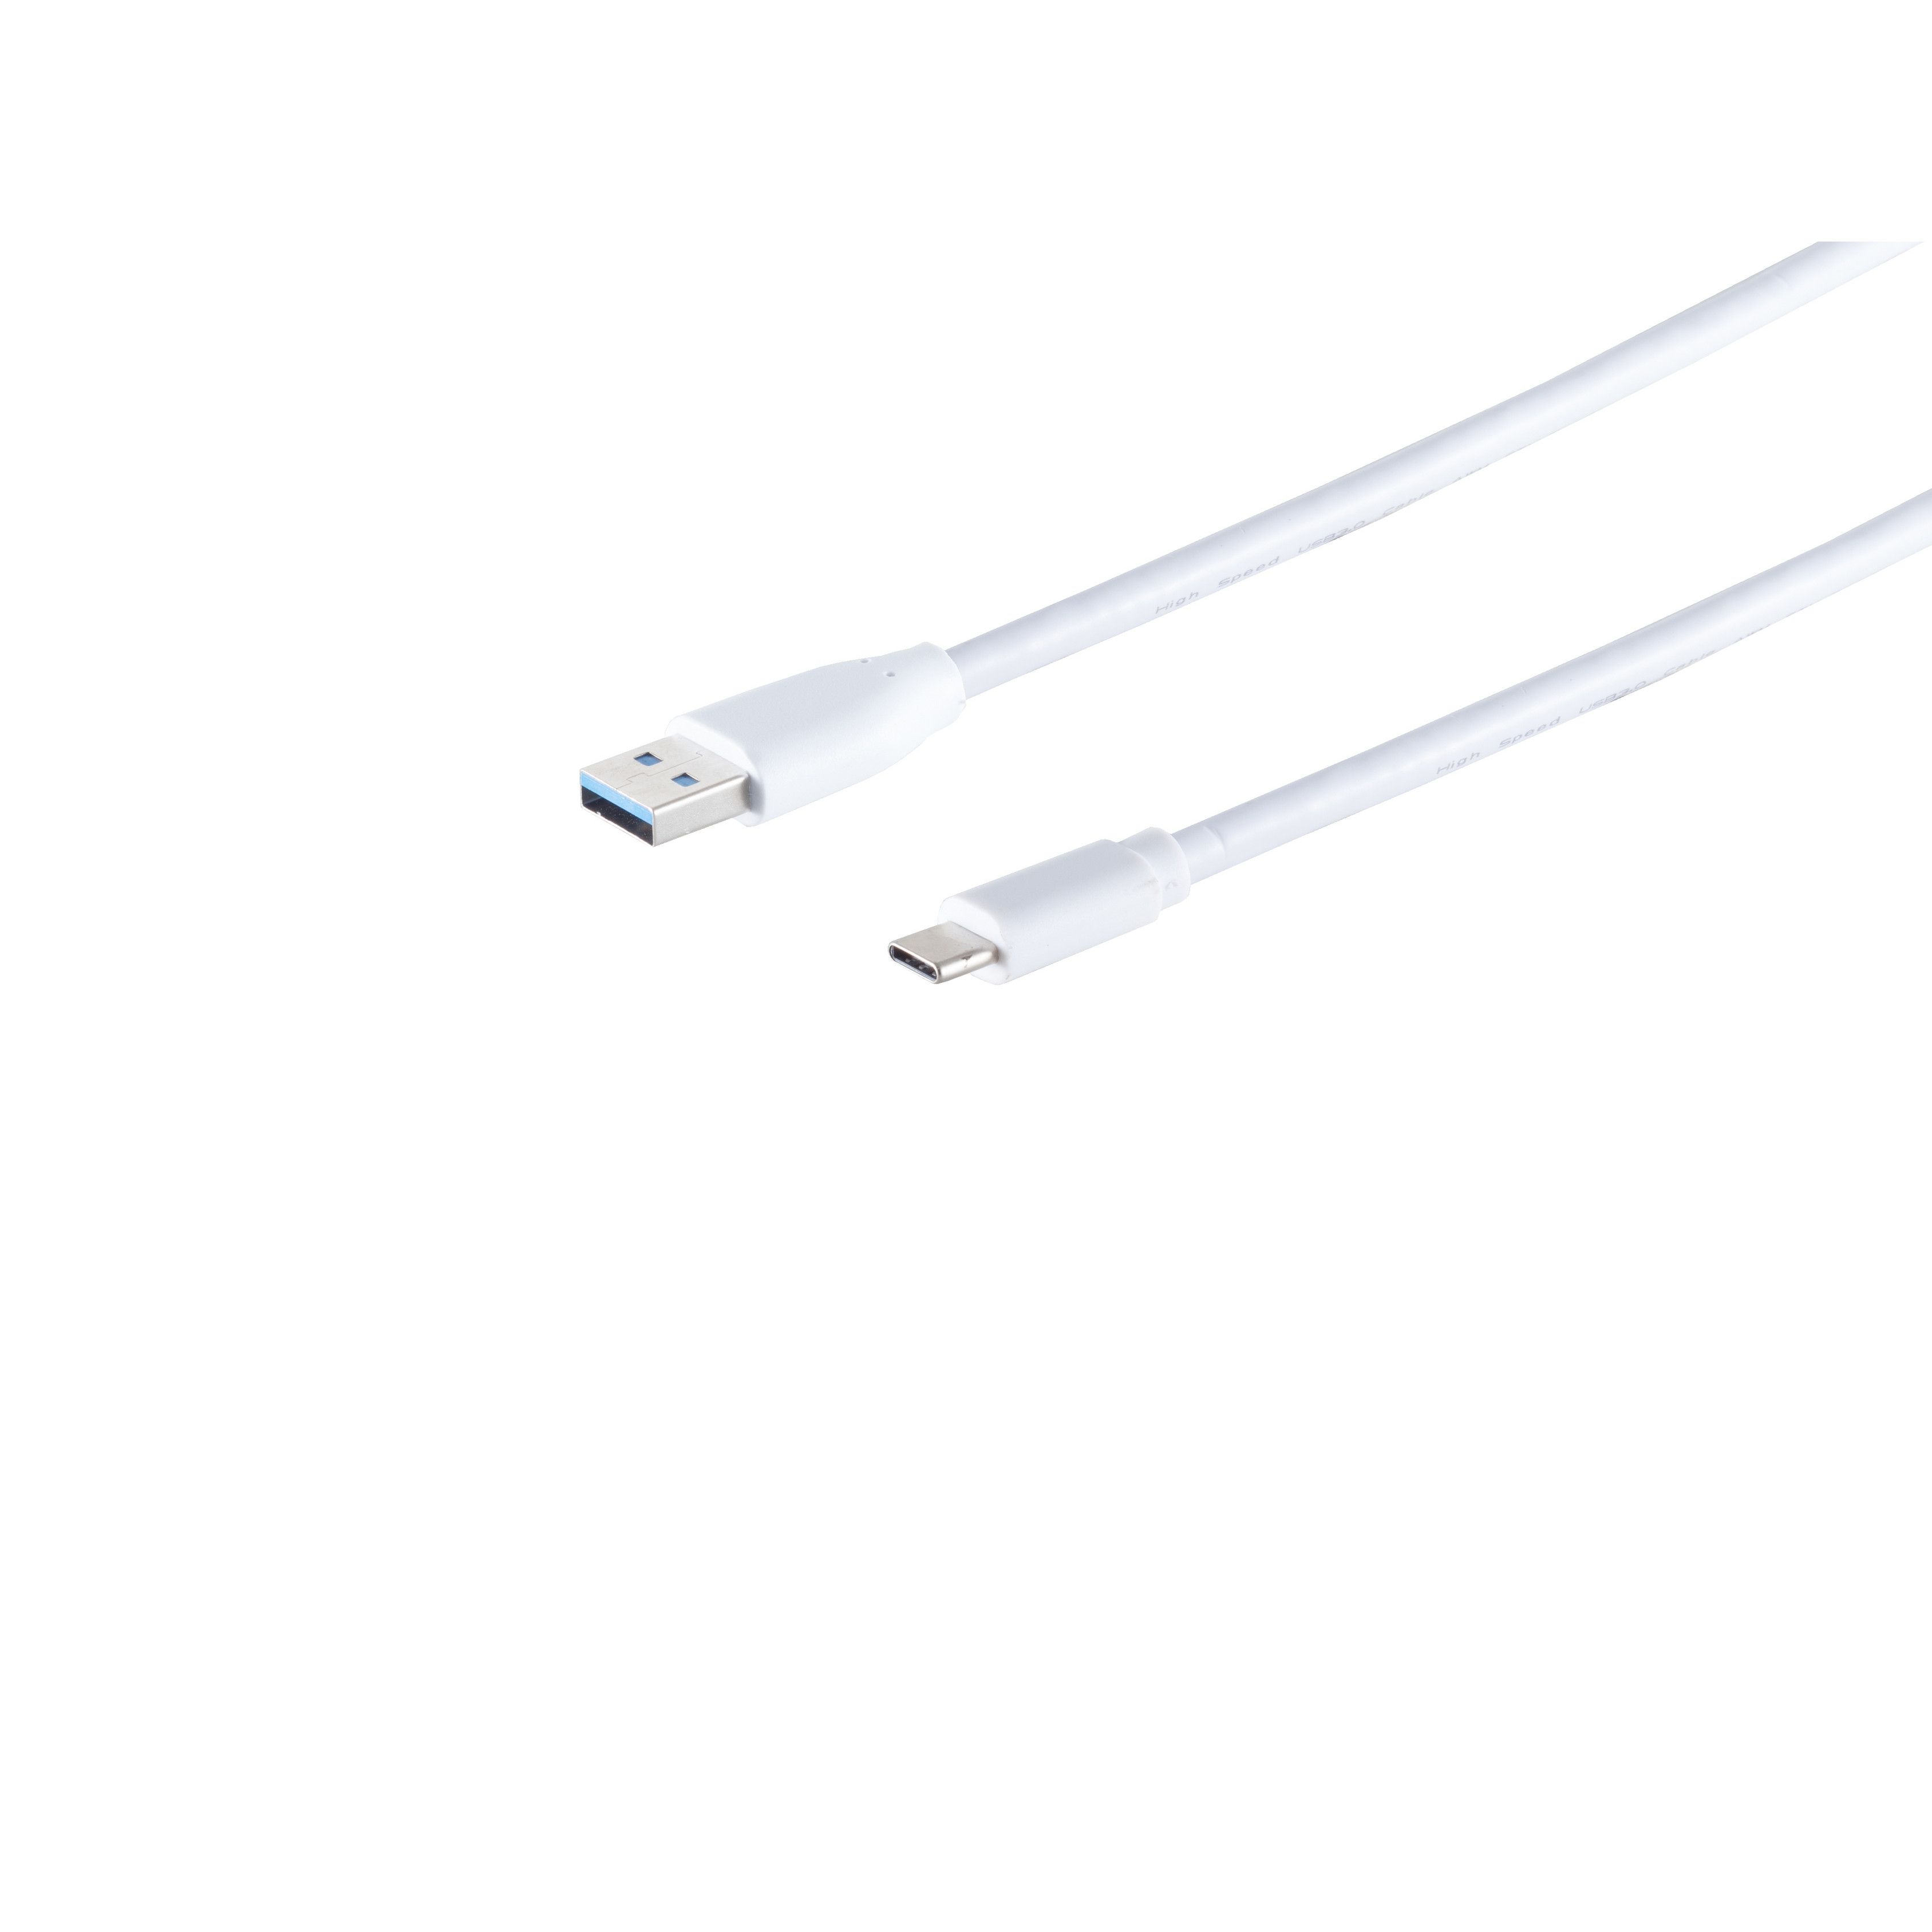 USB CONNECTIVITY USB S/CONN 3.1 1m 3.0 A Stecker weiß Kabel Kabel -USB C MAXIMUM Stecker